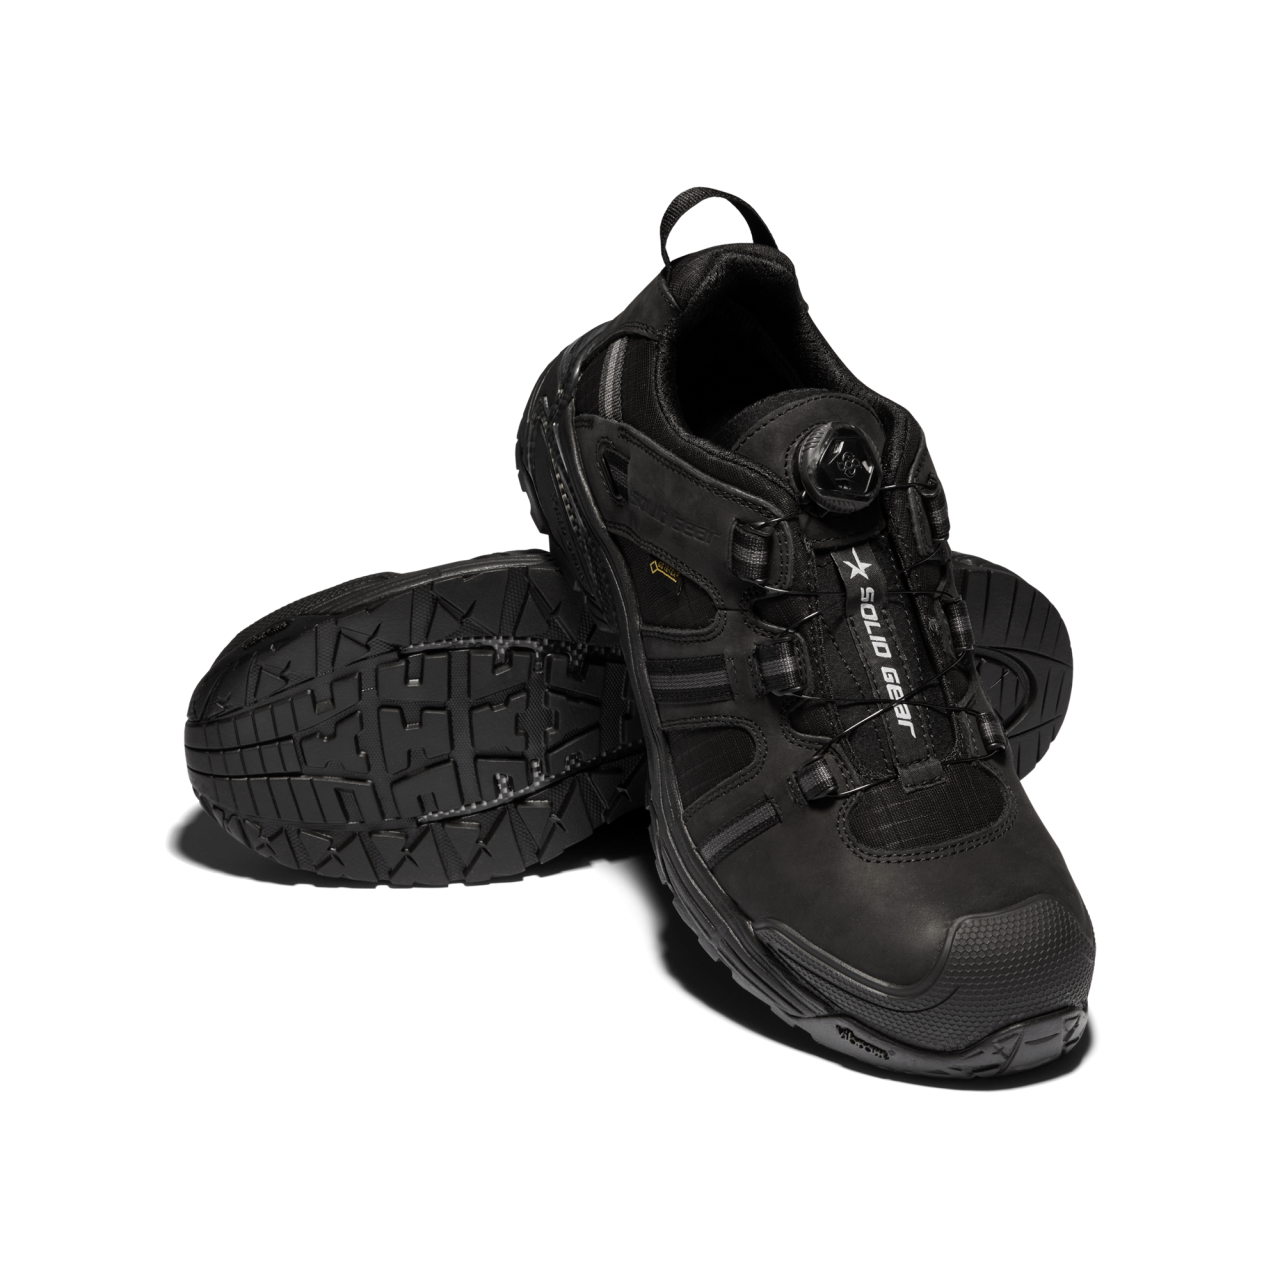 Zapato de seguridad S3 Enforcer GTX talla 41